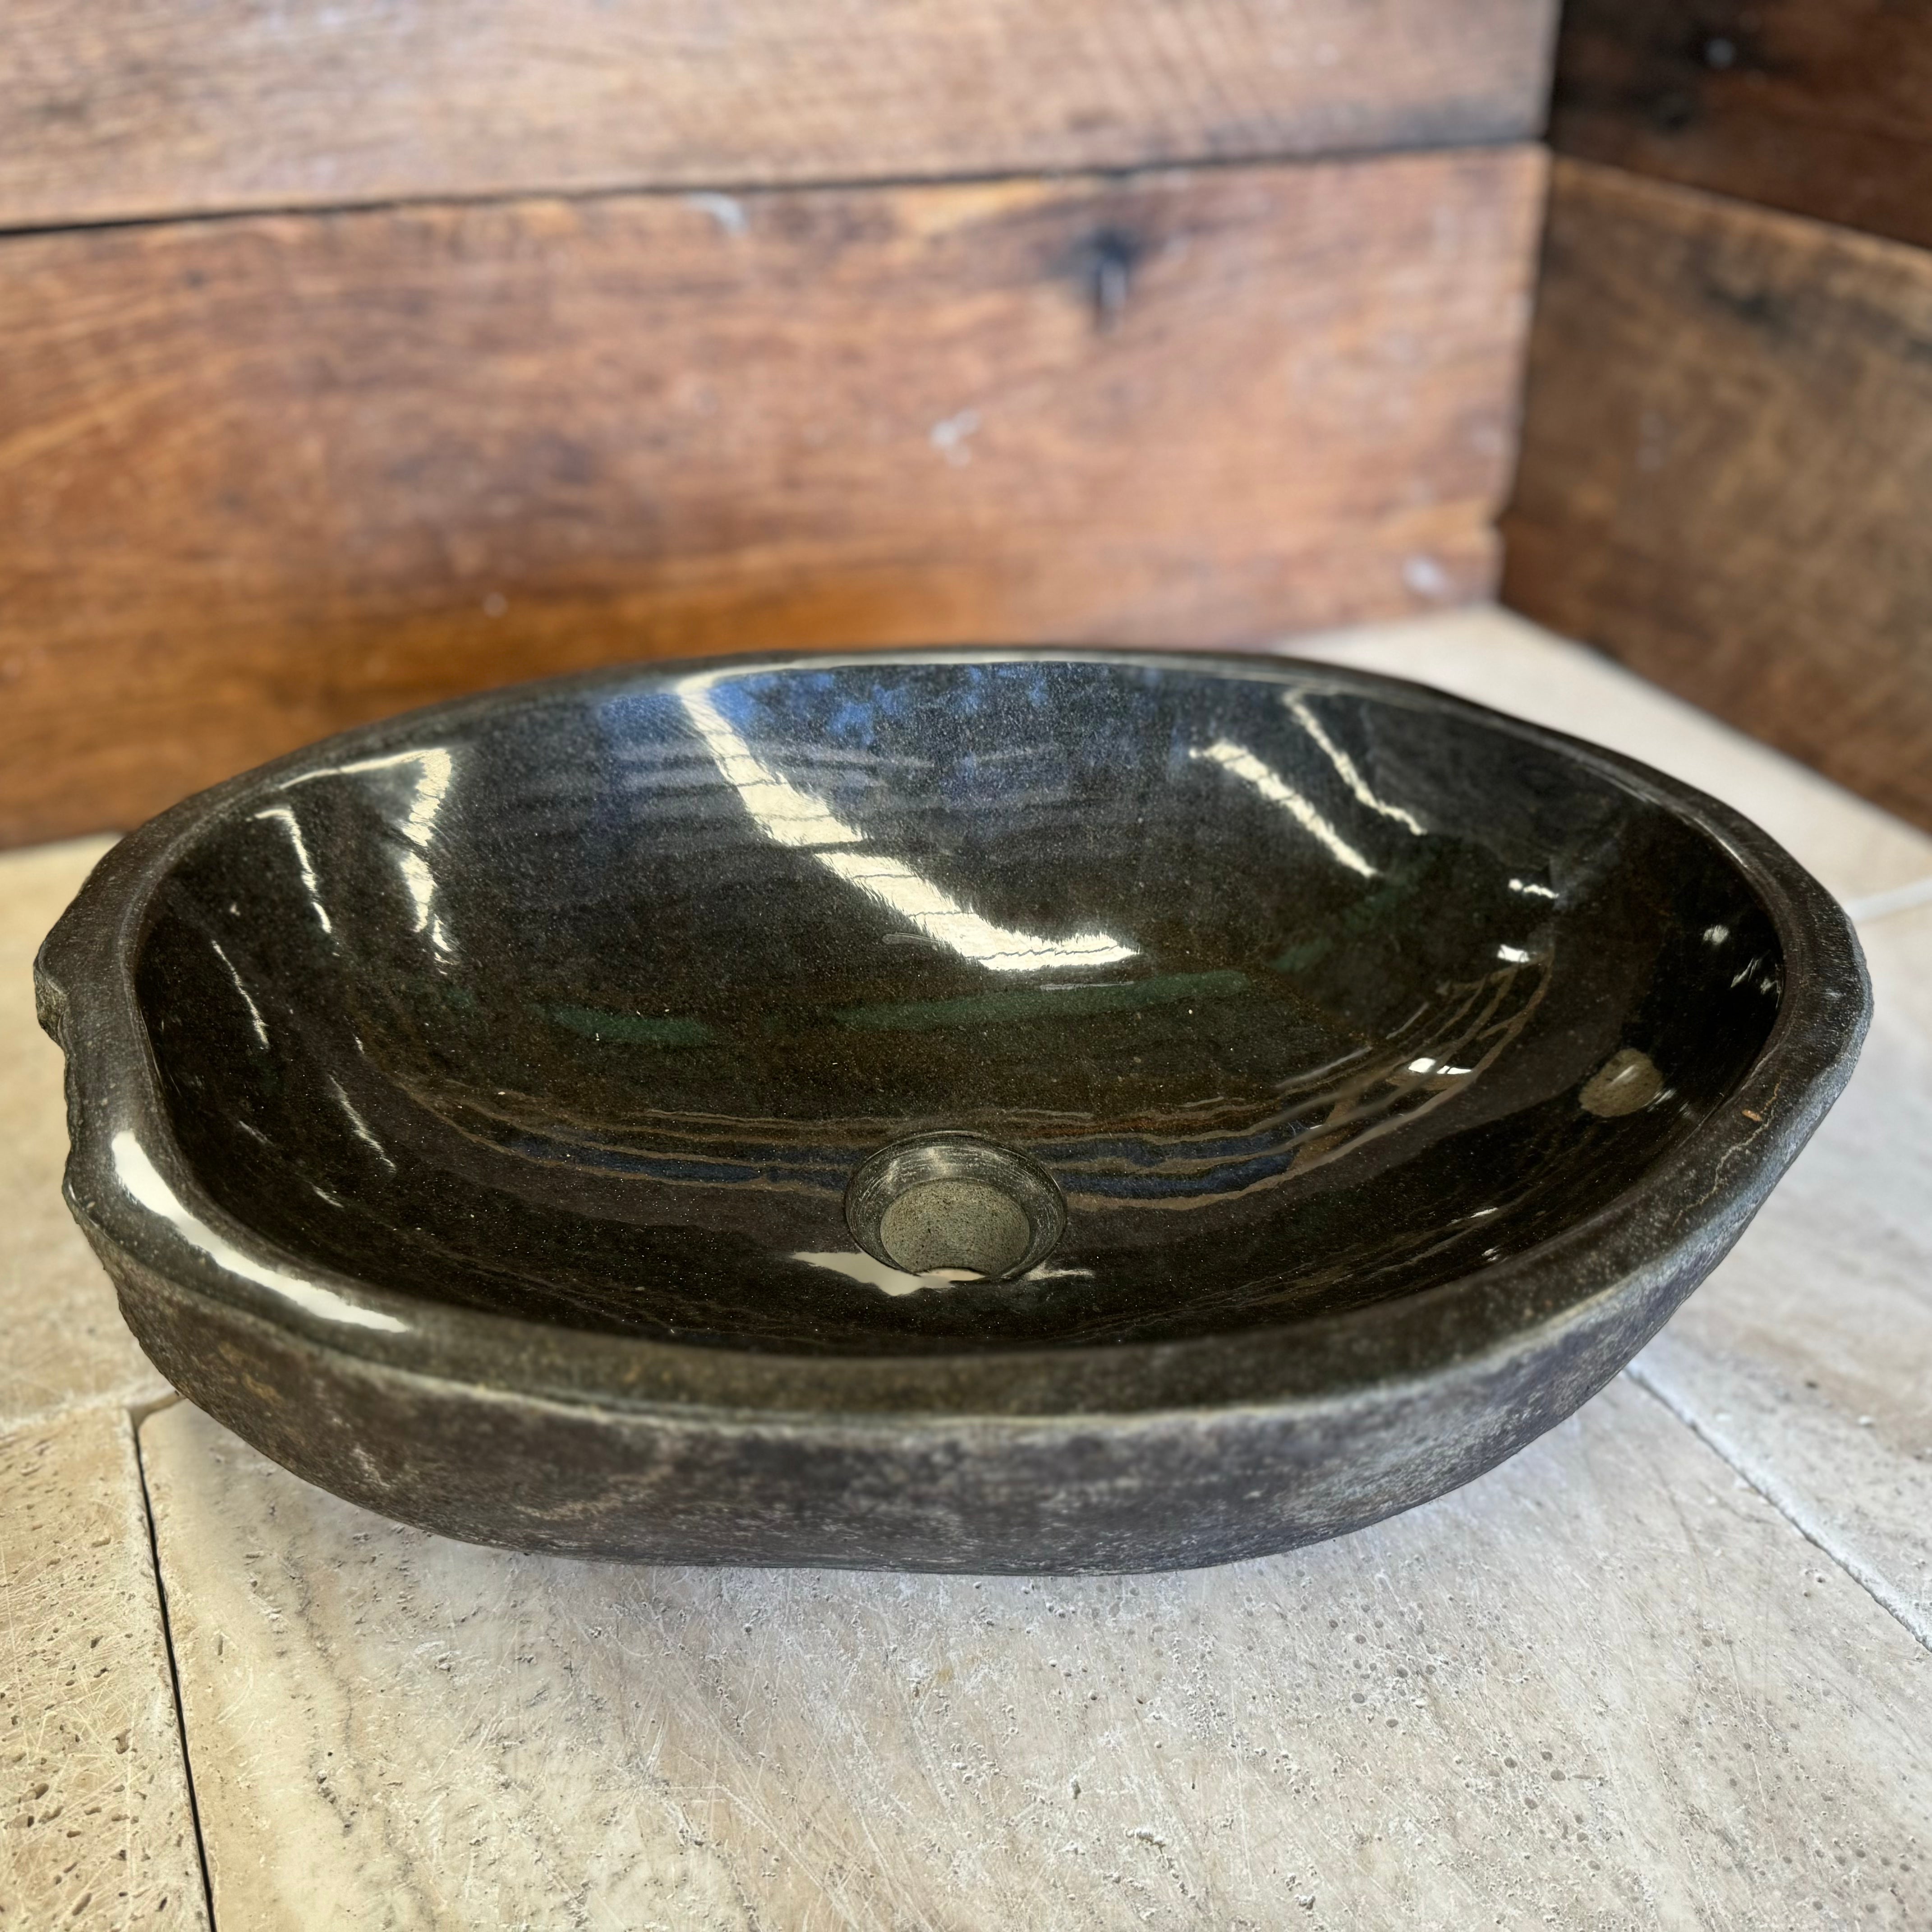 Handmade Natural Oval River Stone Bathroom Basin - RM2306046